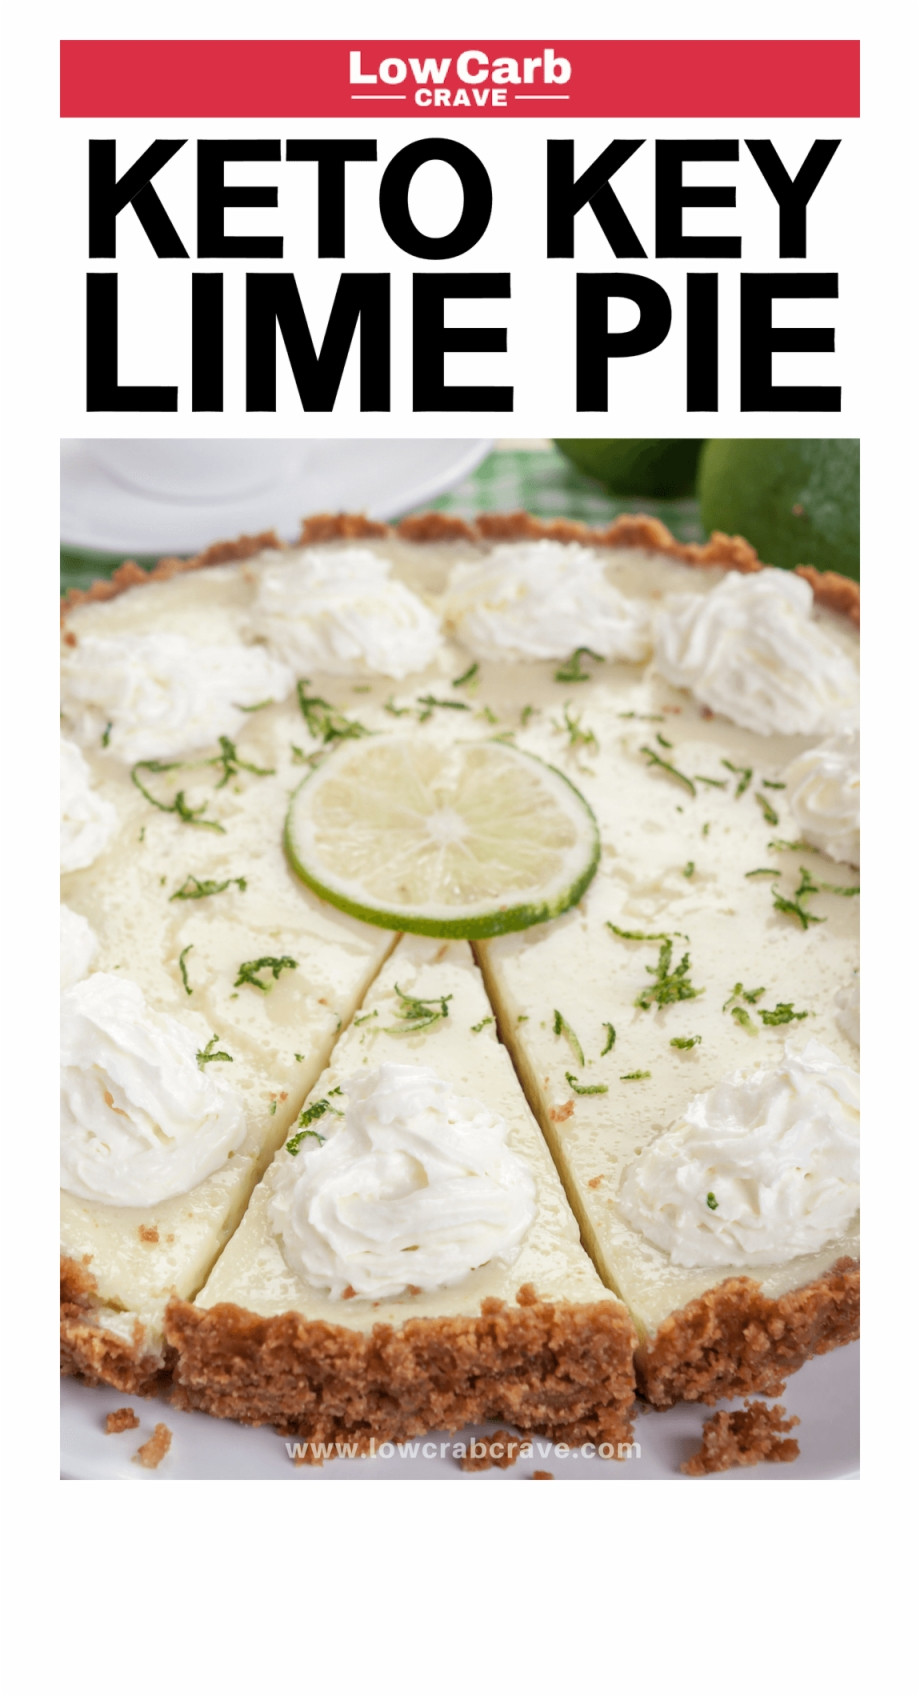 Low Carb Key Lime Pie
 Best Homemade Keto Key Lime Pie Recipe This Low Carb Key